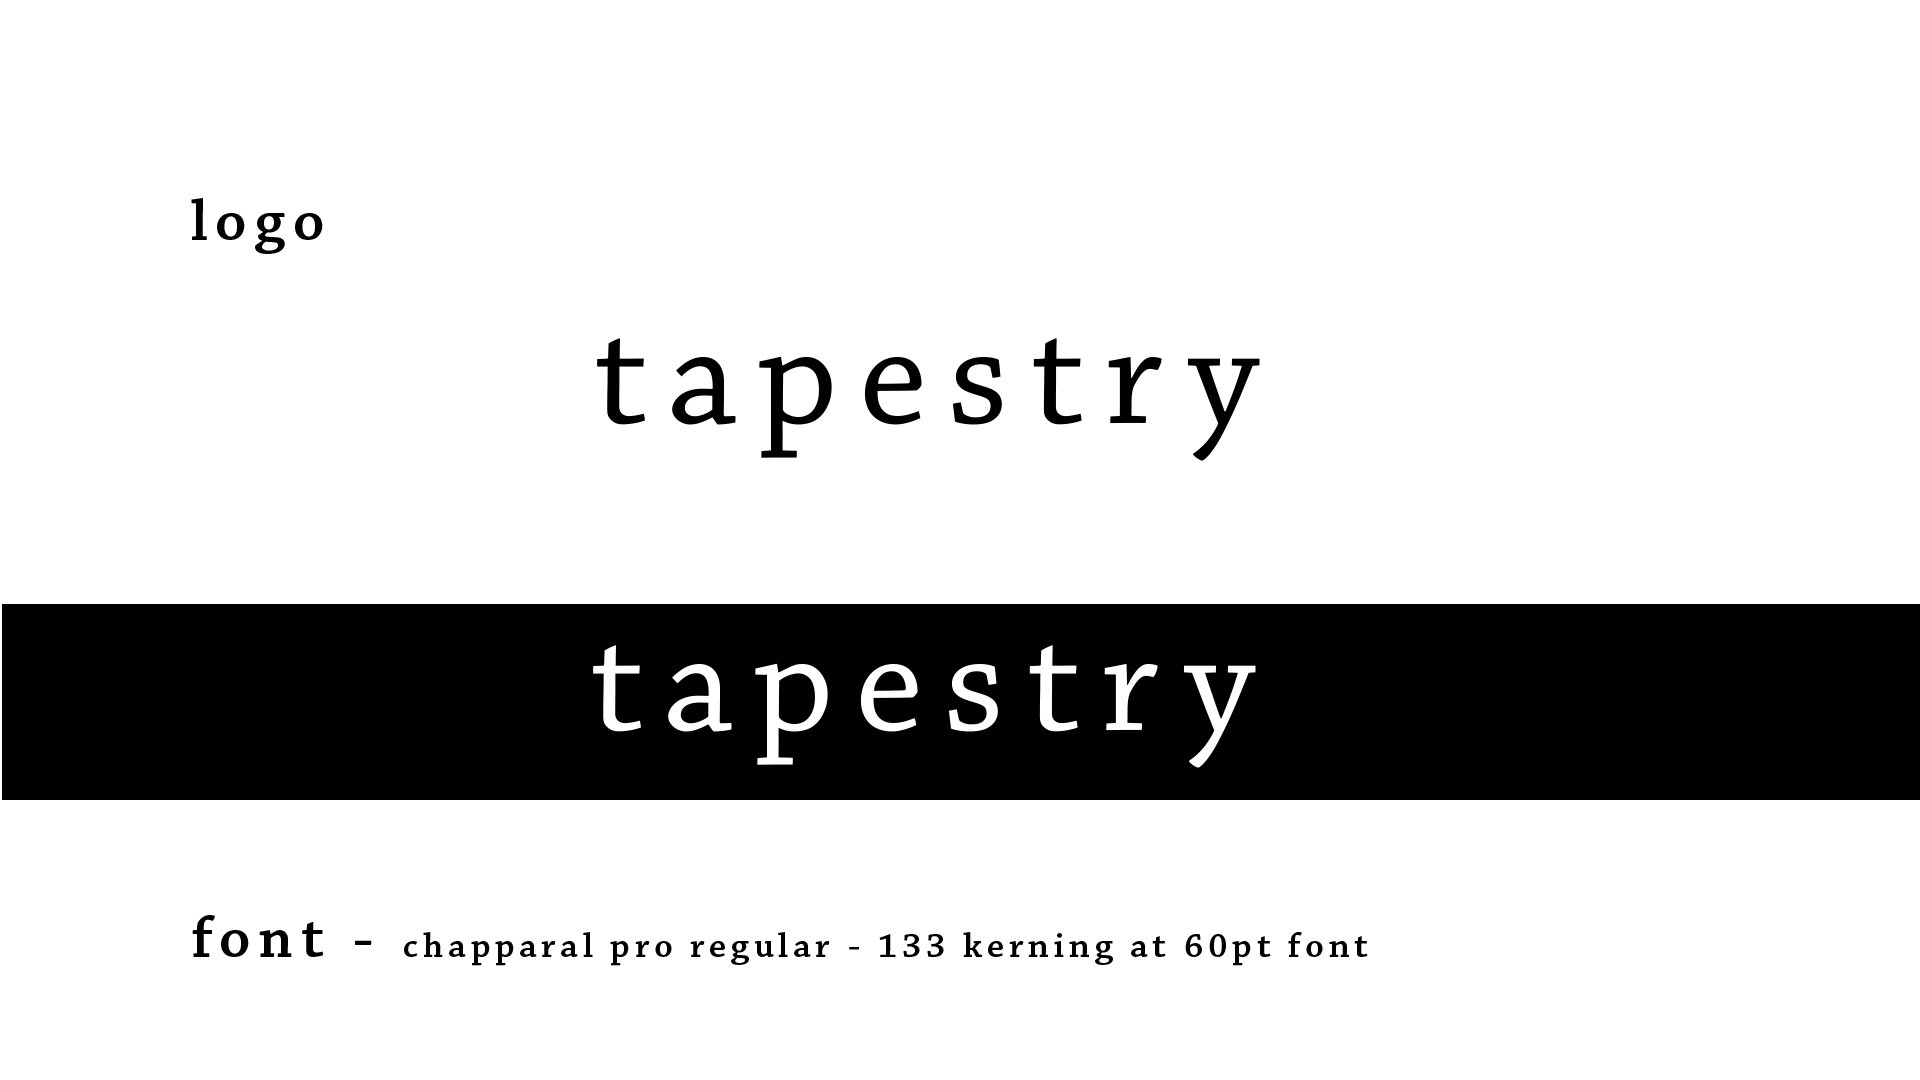 TAPESTRY BRAND GUIDE 5.4-7 copy.jpg